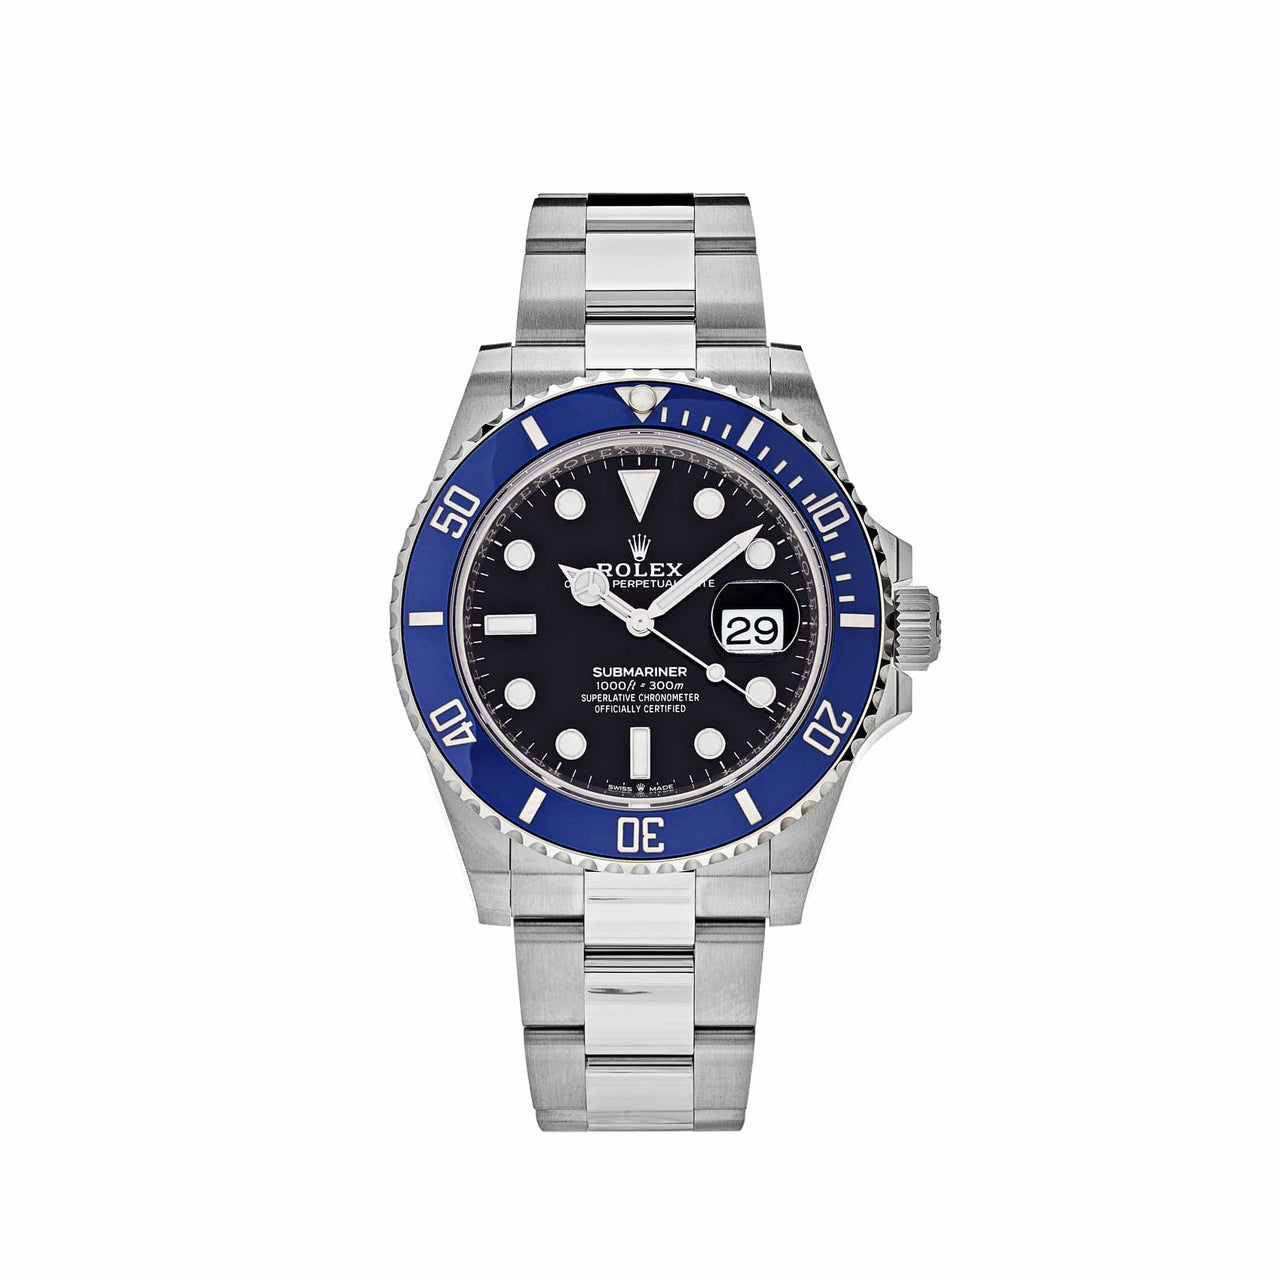 Rolex Submariner Date 41 White Gold Black Dial Blue Bezel 126619LB (Draft 2021) wrist aficionado